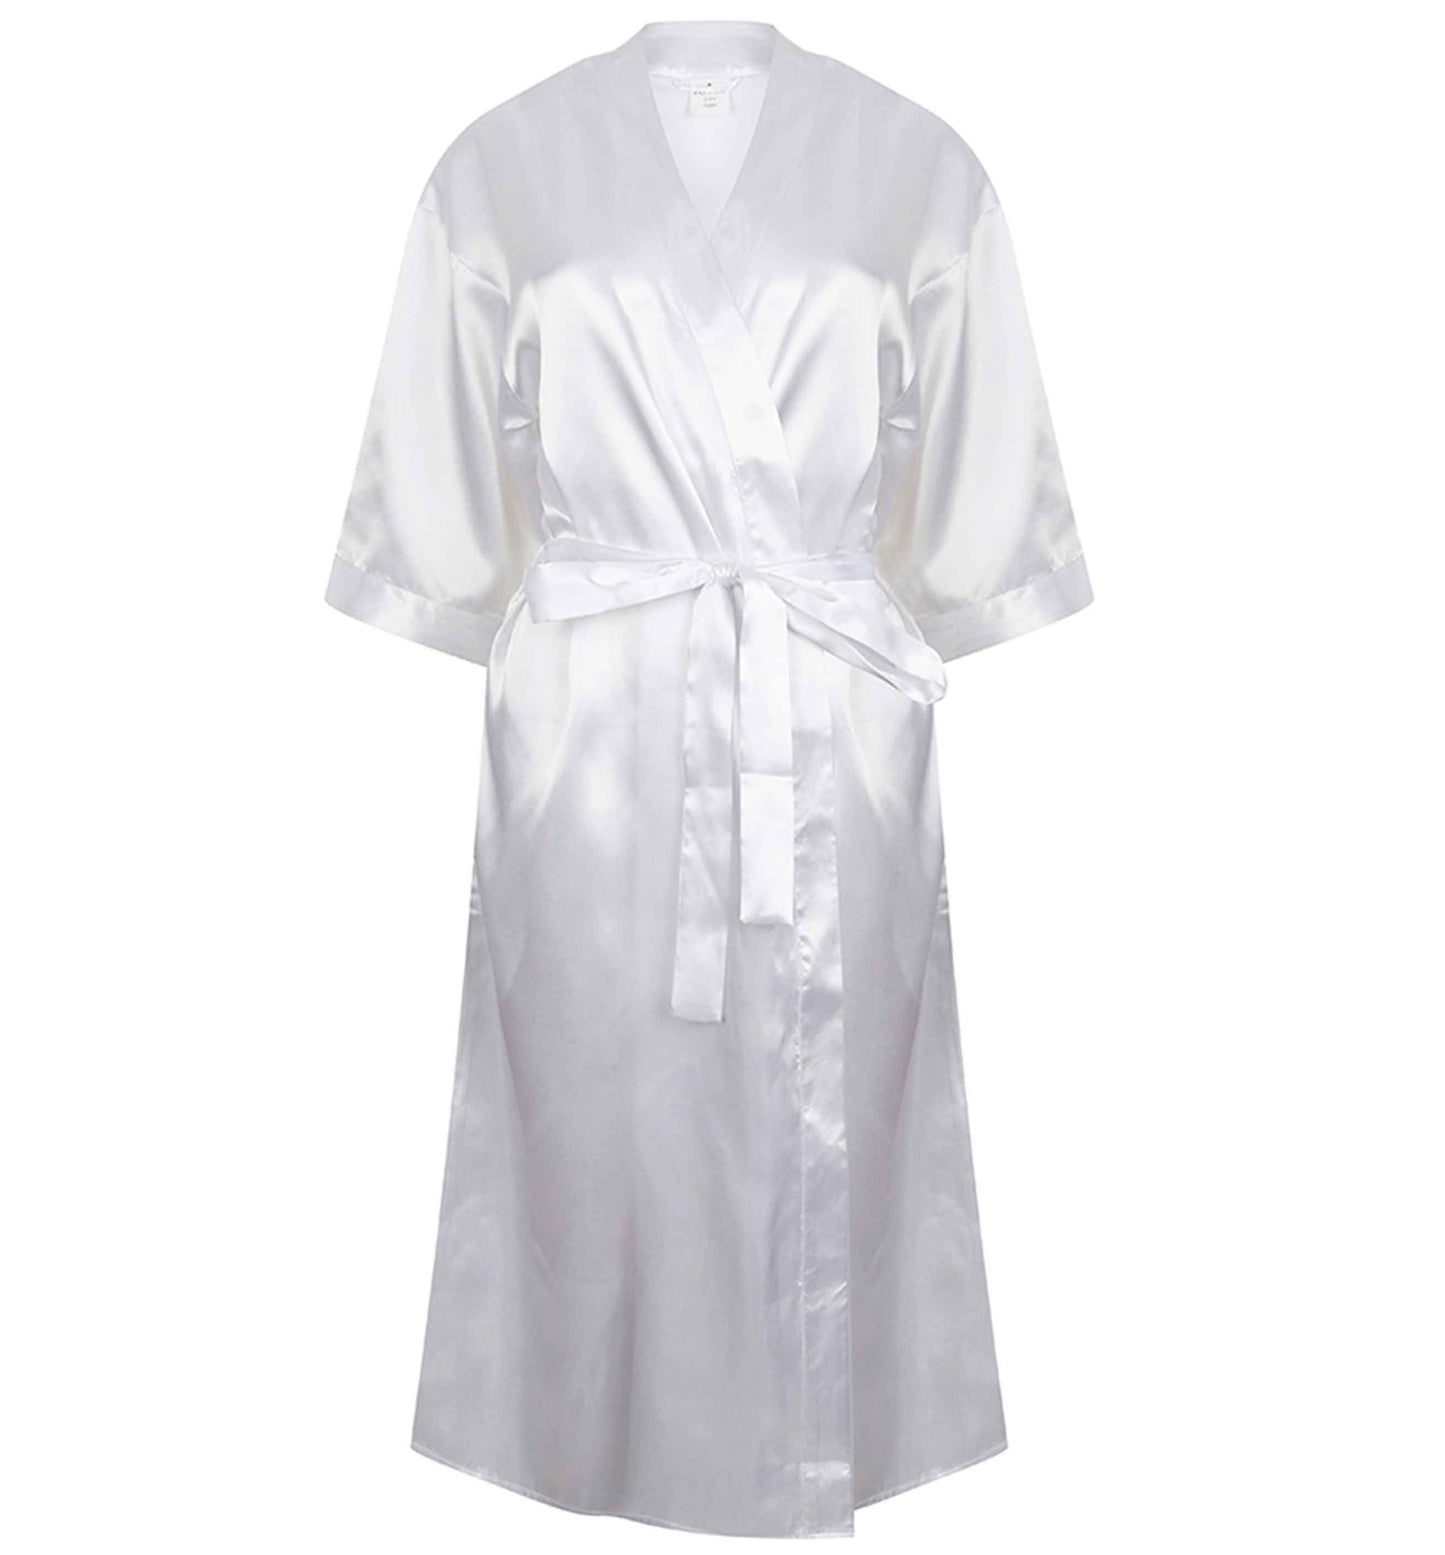 Last Christmas before we say I do | 8-18 | KimoLast Christmas before we say I do style satin robe | Ladies dressing gown